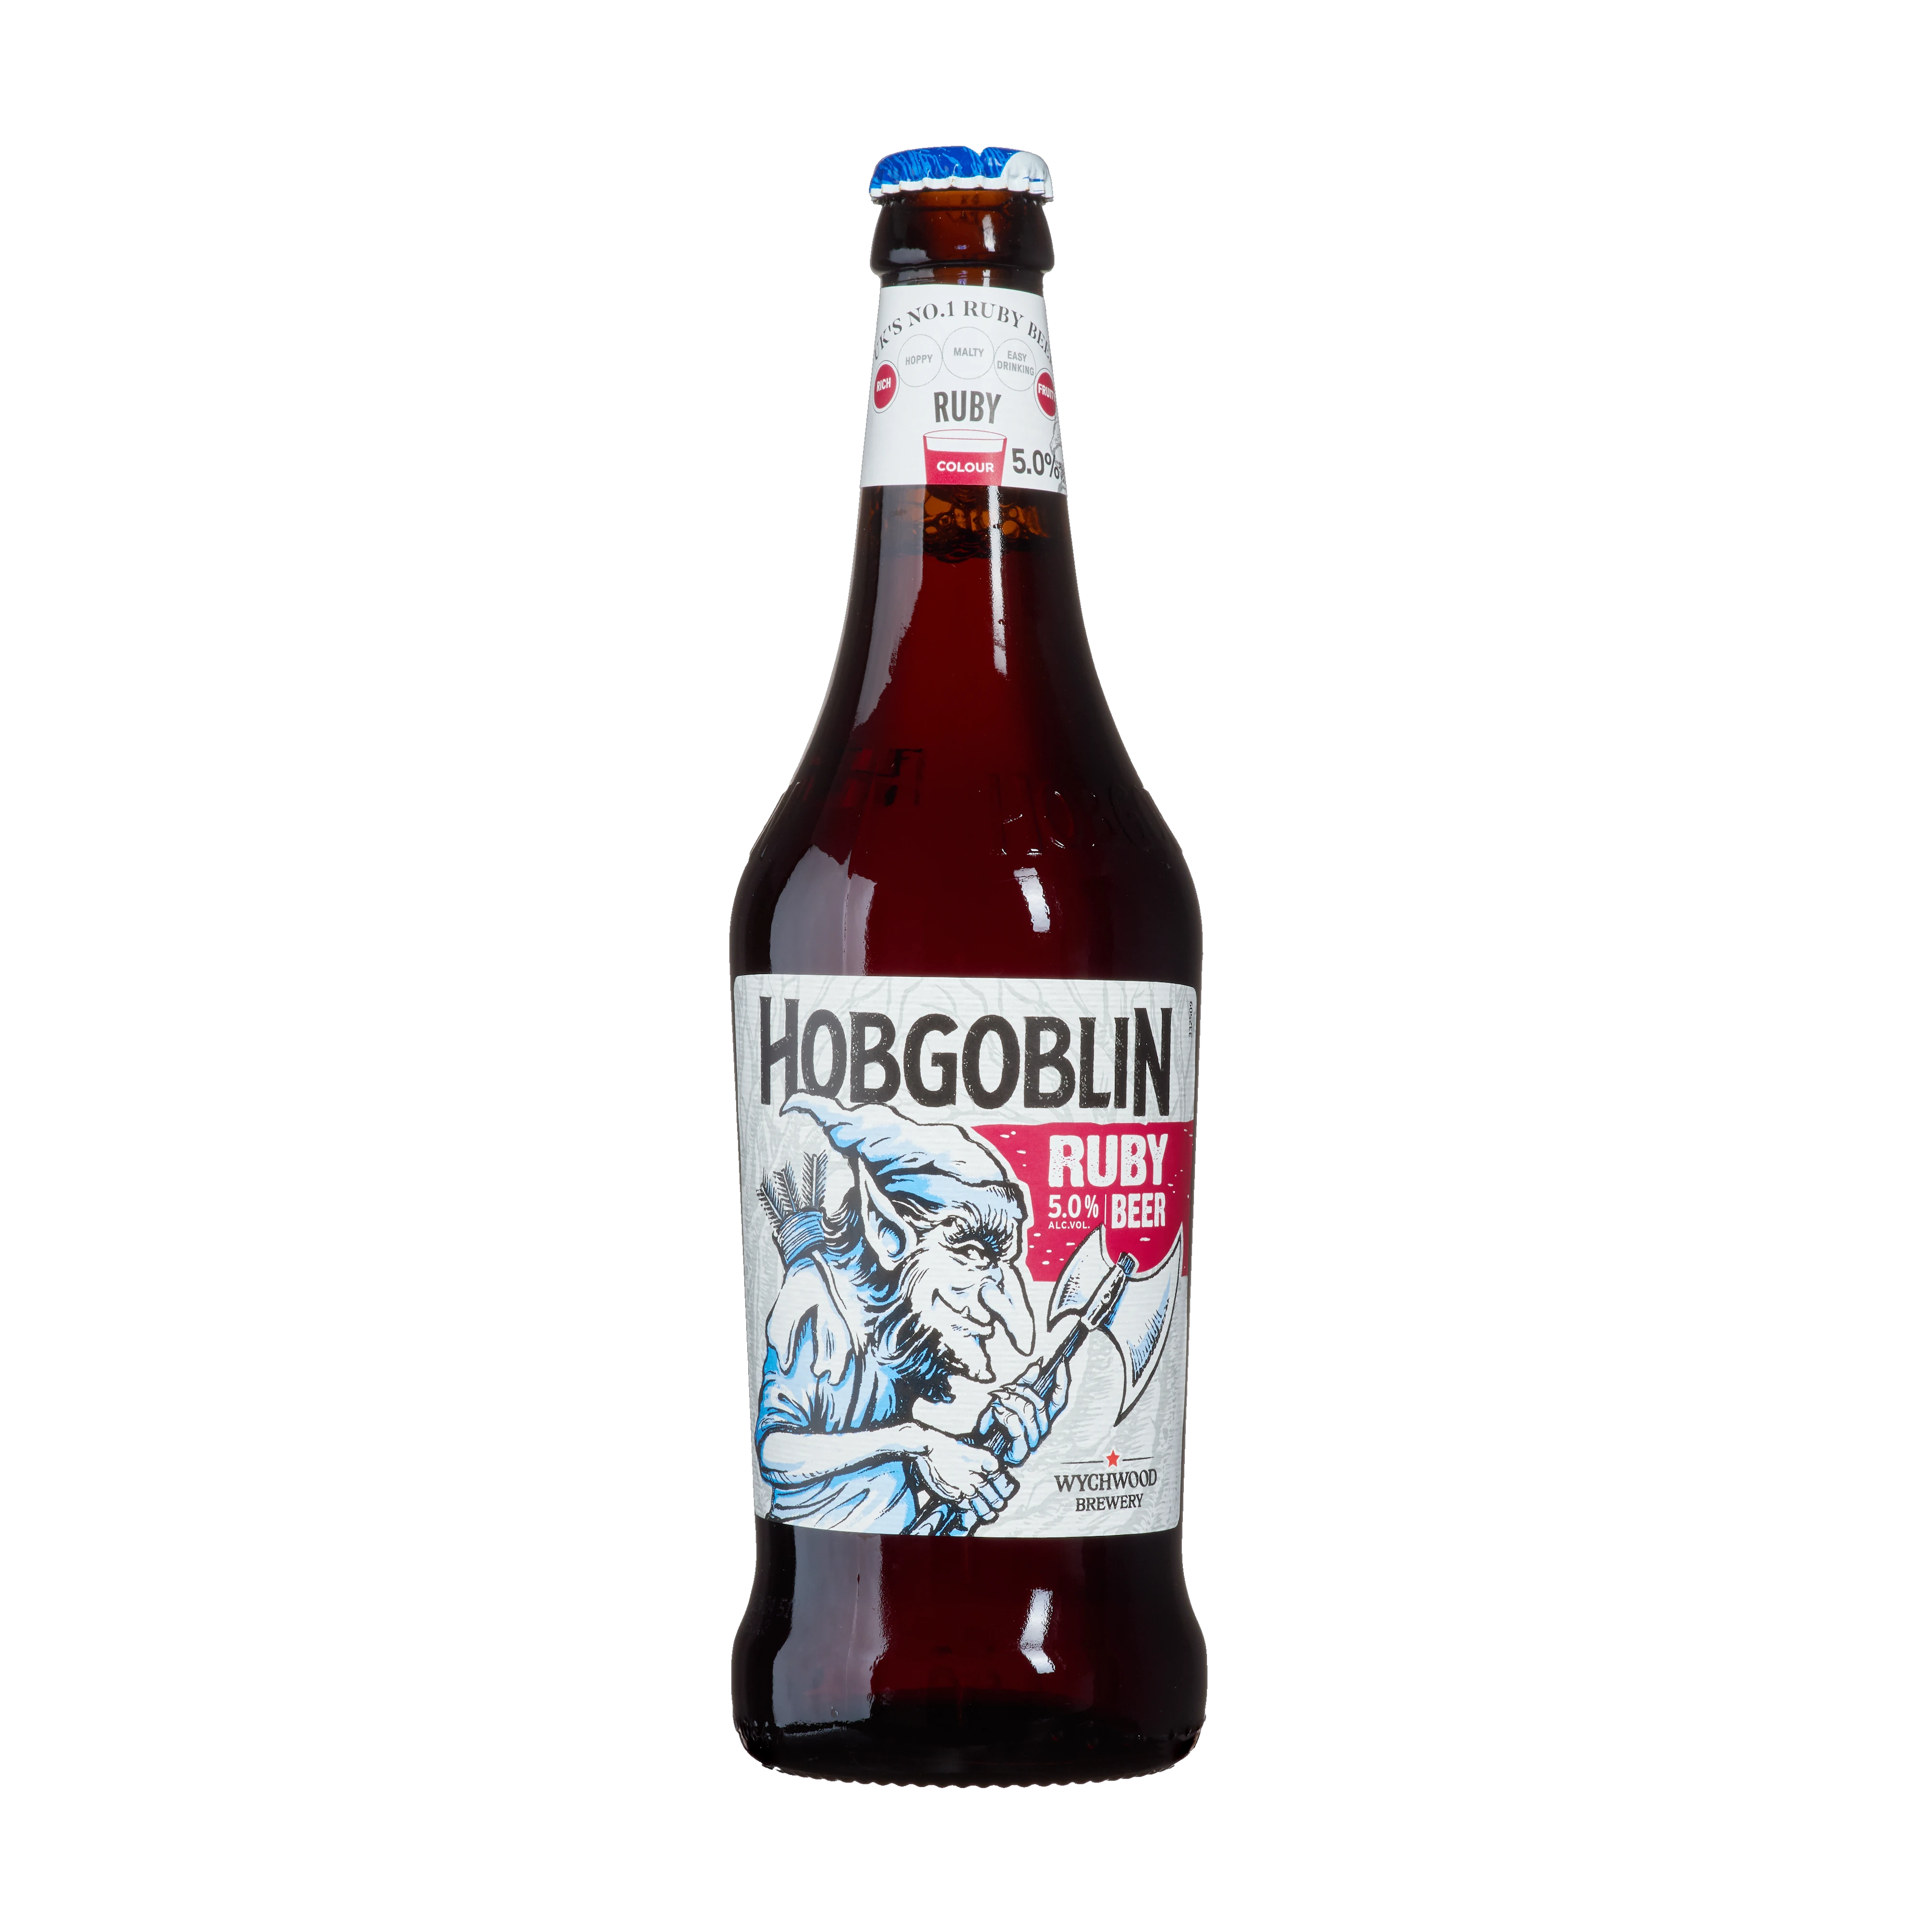 Wychwood Brewery Hobgoblin Ruby Beer 